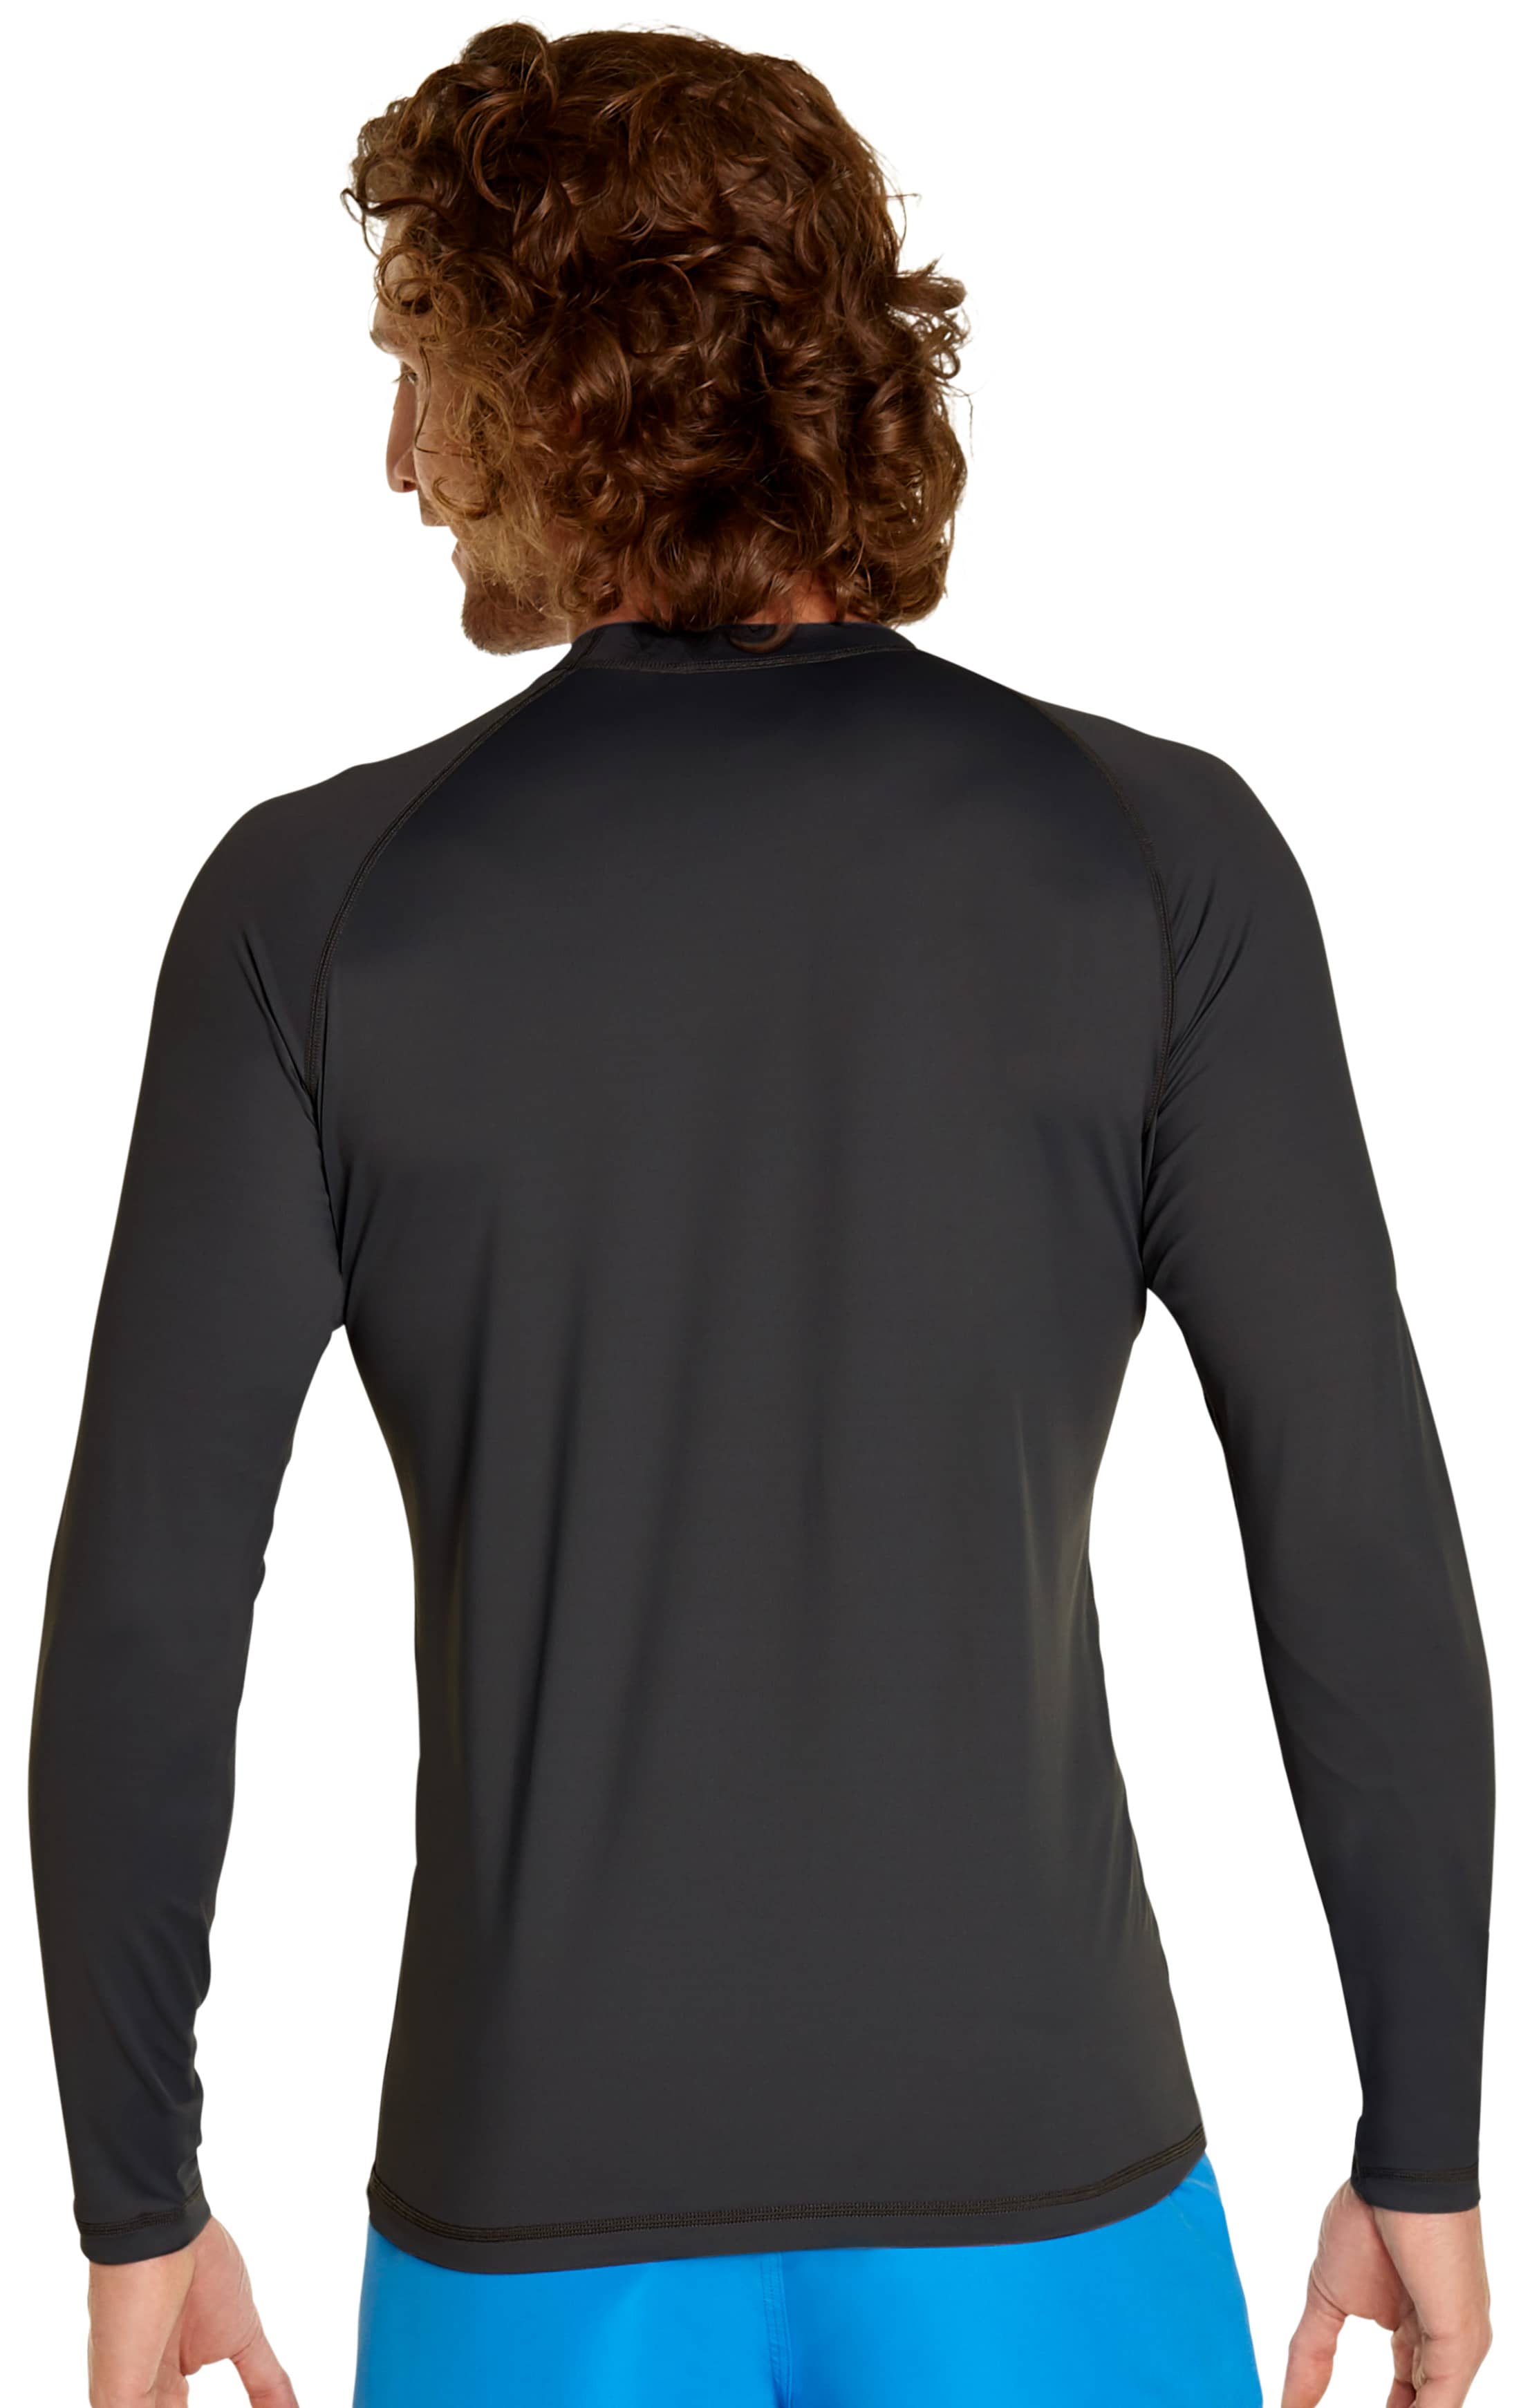 OTF Blk-Logo Ladies' Rash Guard Long-Sleeve Shirt Details about   0130 